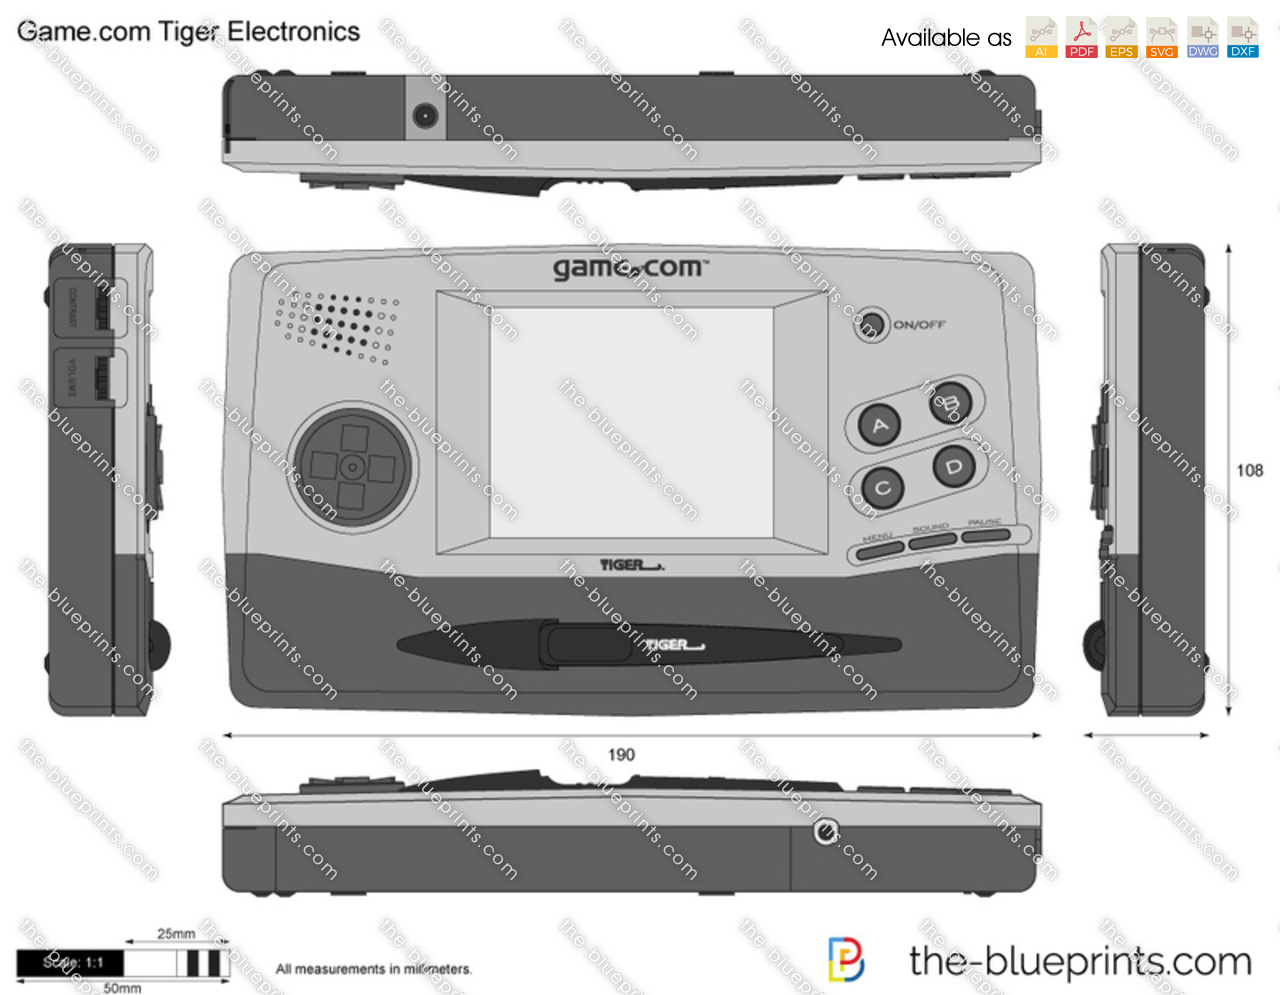 Game.com Tiger Electronics